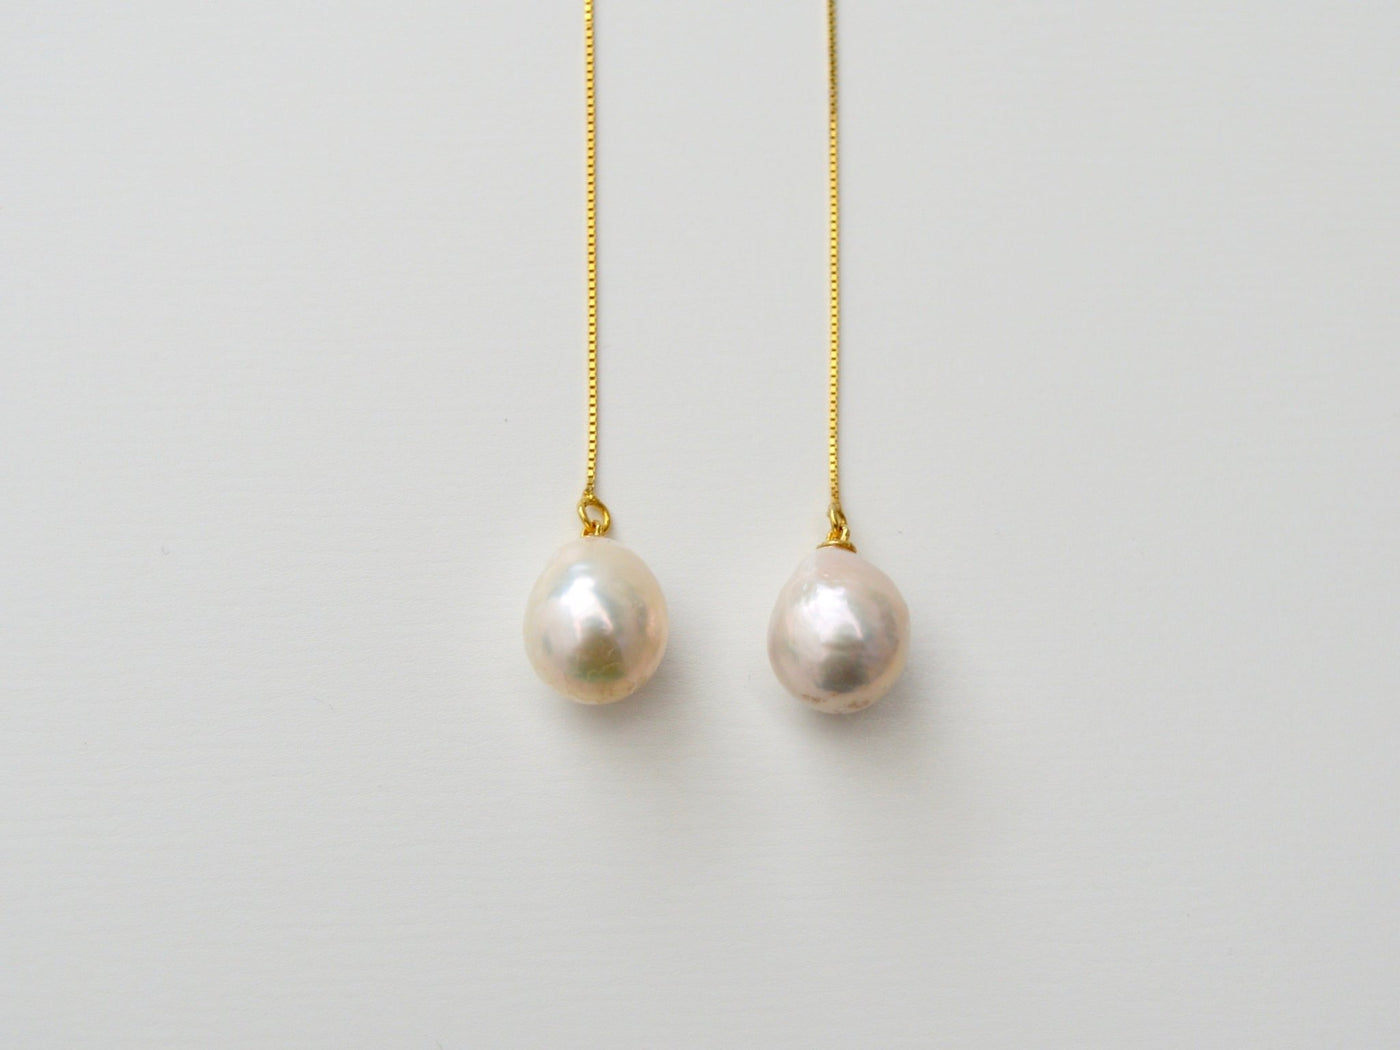 Baroque Pearls: Threader Ohrkette Drops mit echten Perlen | vergoldet